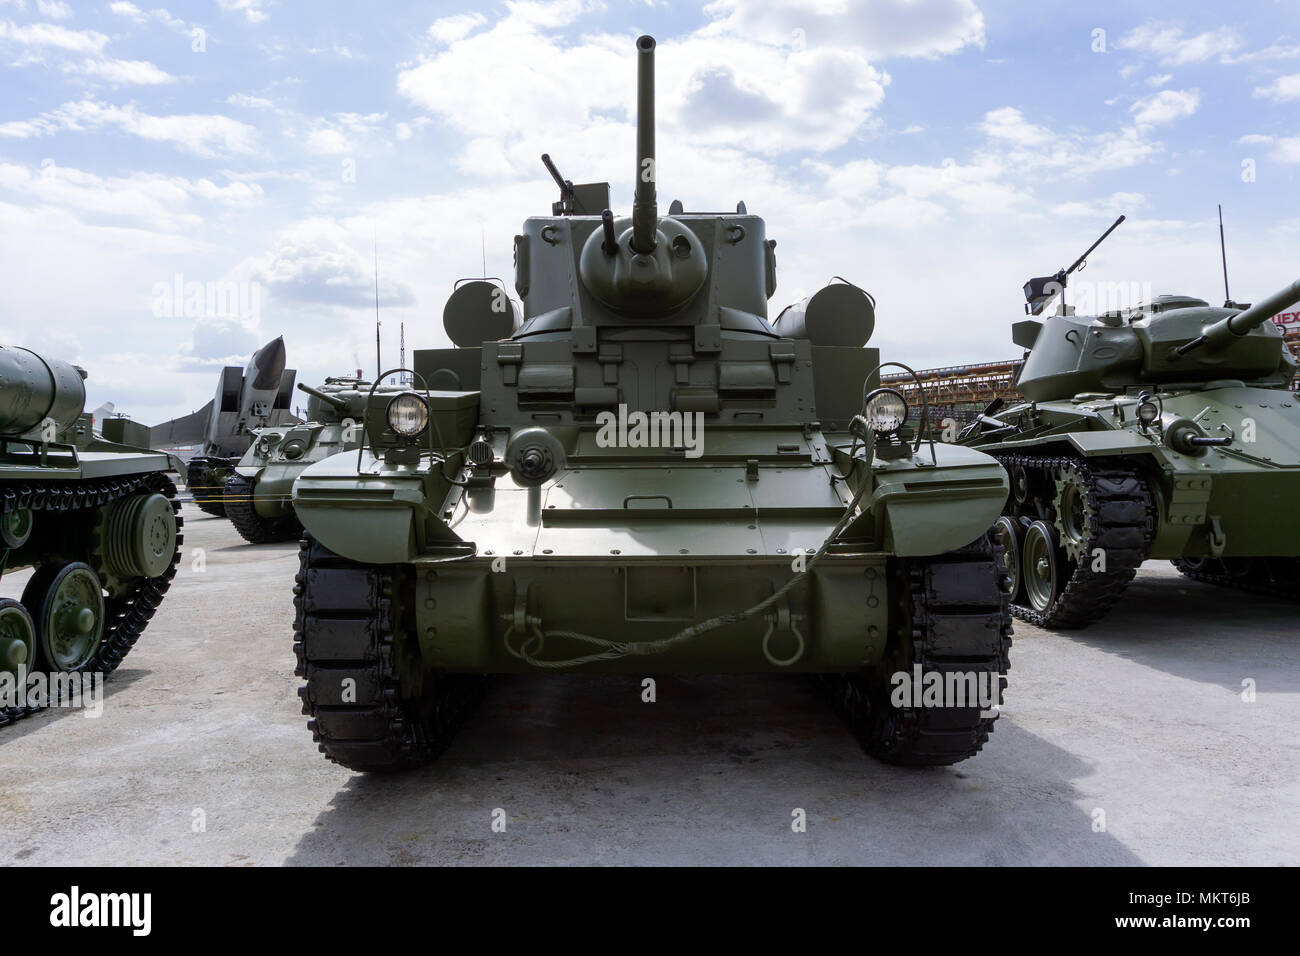 Verkhnyaya Pyshma, Russia - May 01, 2018: American light tank M3 Stuart in the museum of military equipment, front view Stock Photo